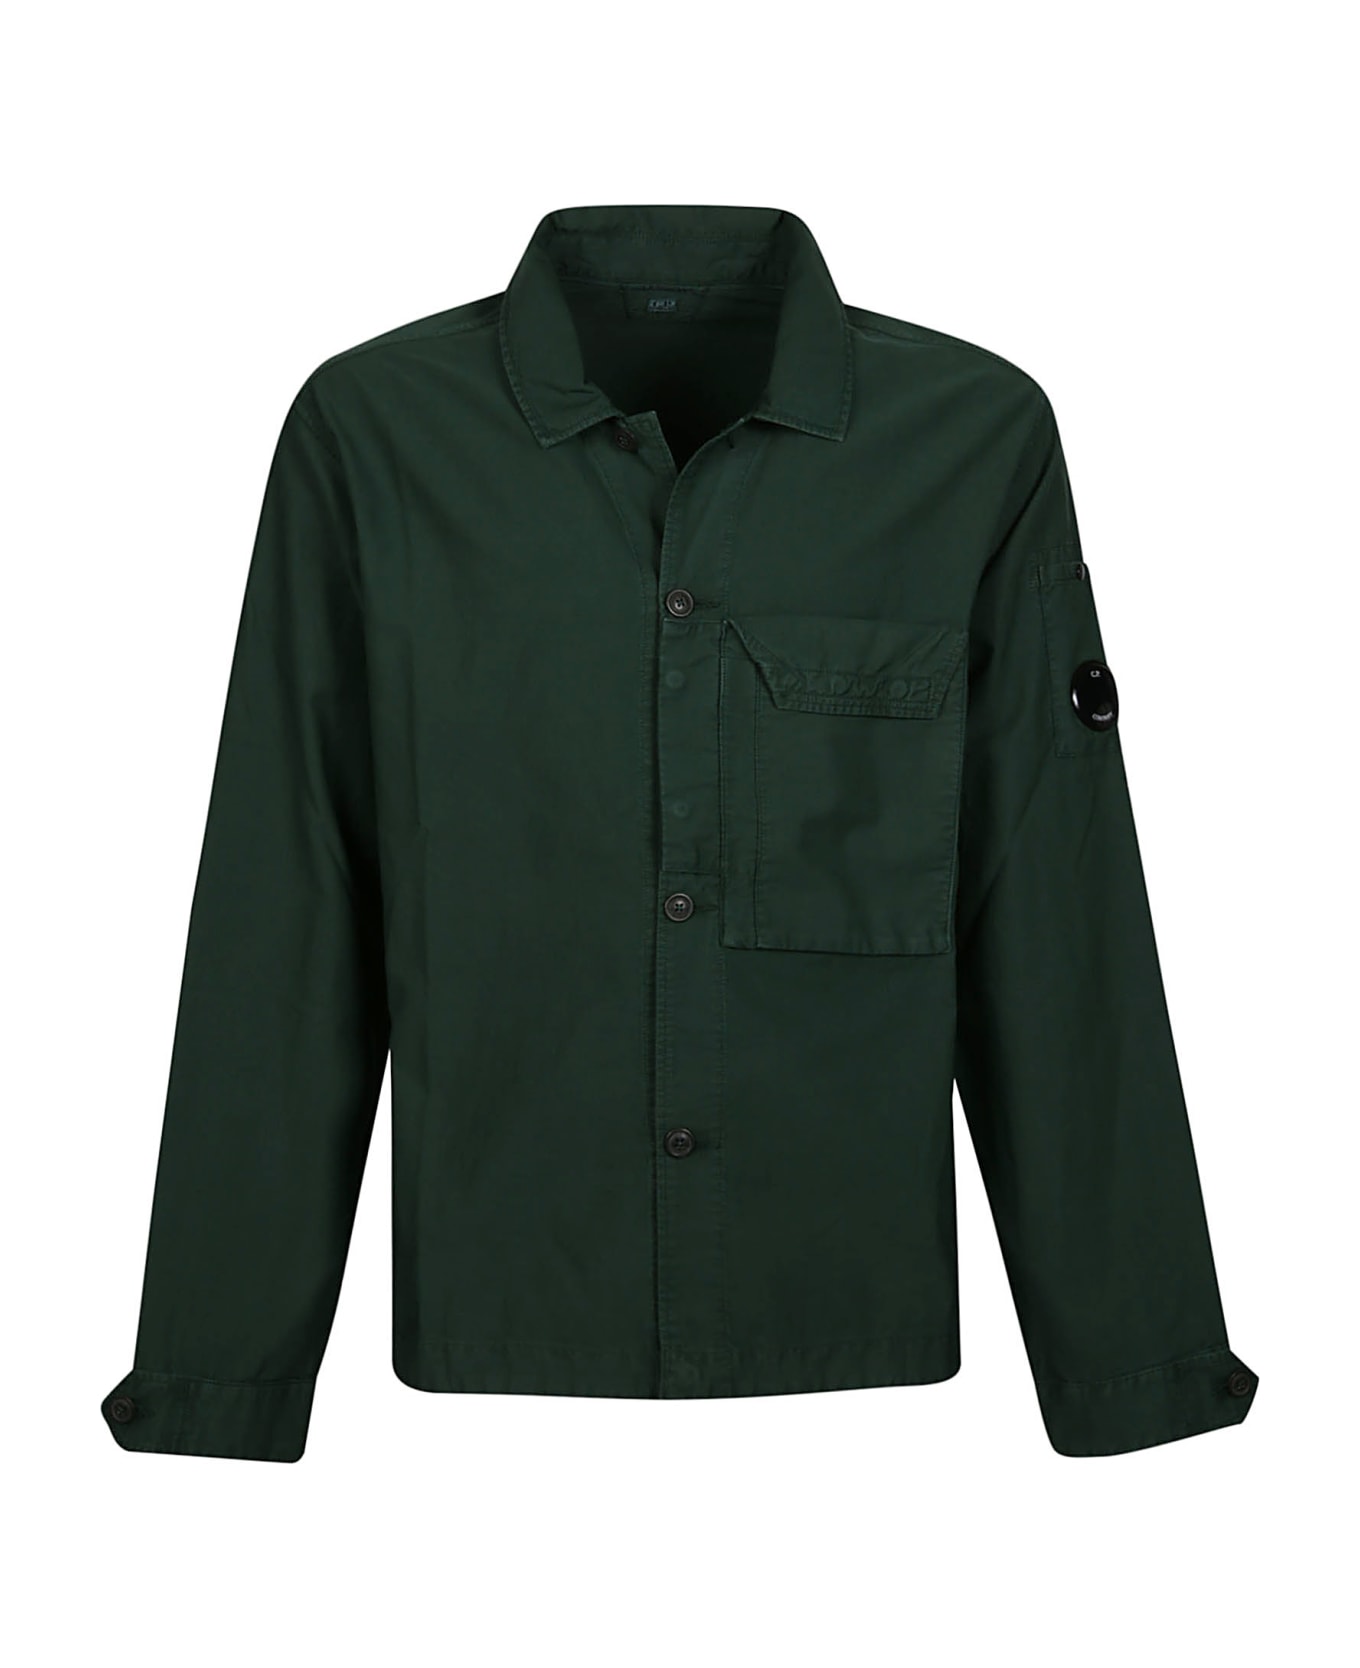 C.P. Company Ottoman Long Sleeve Shirt - Duck Green シャツ